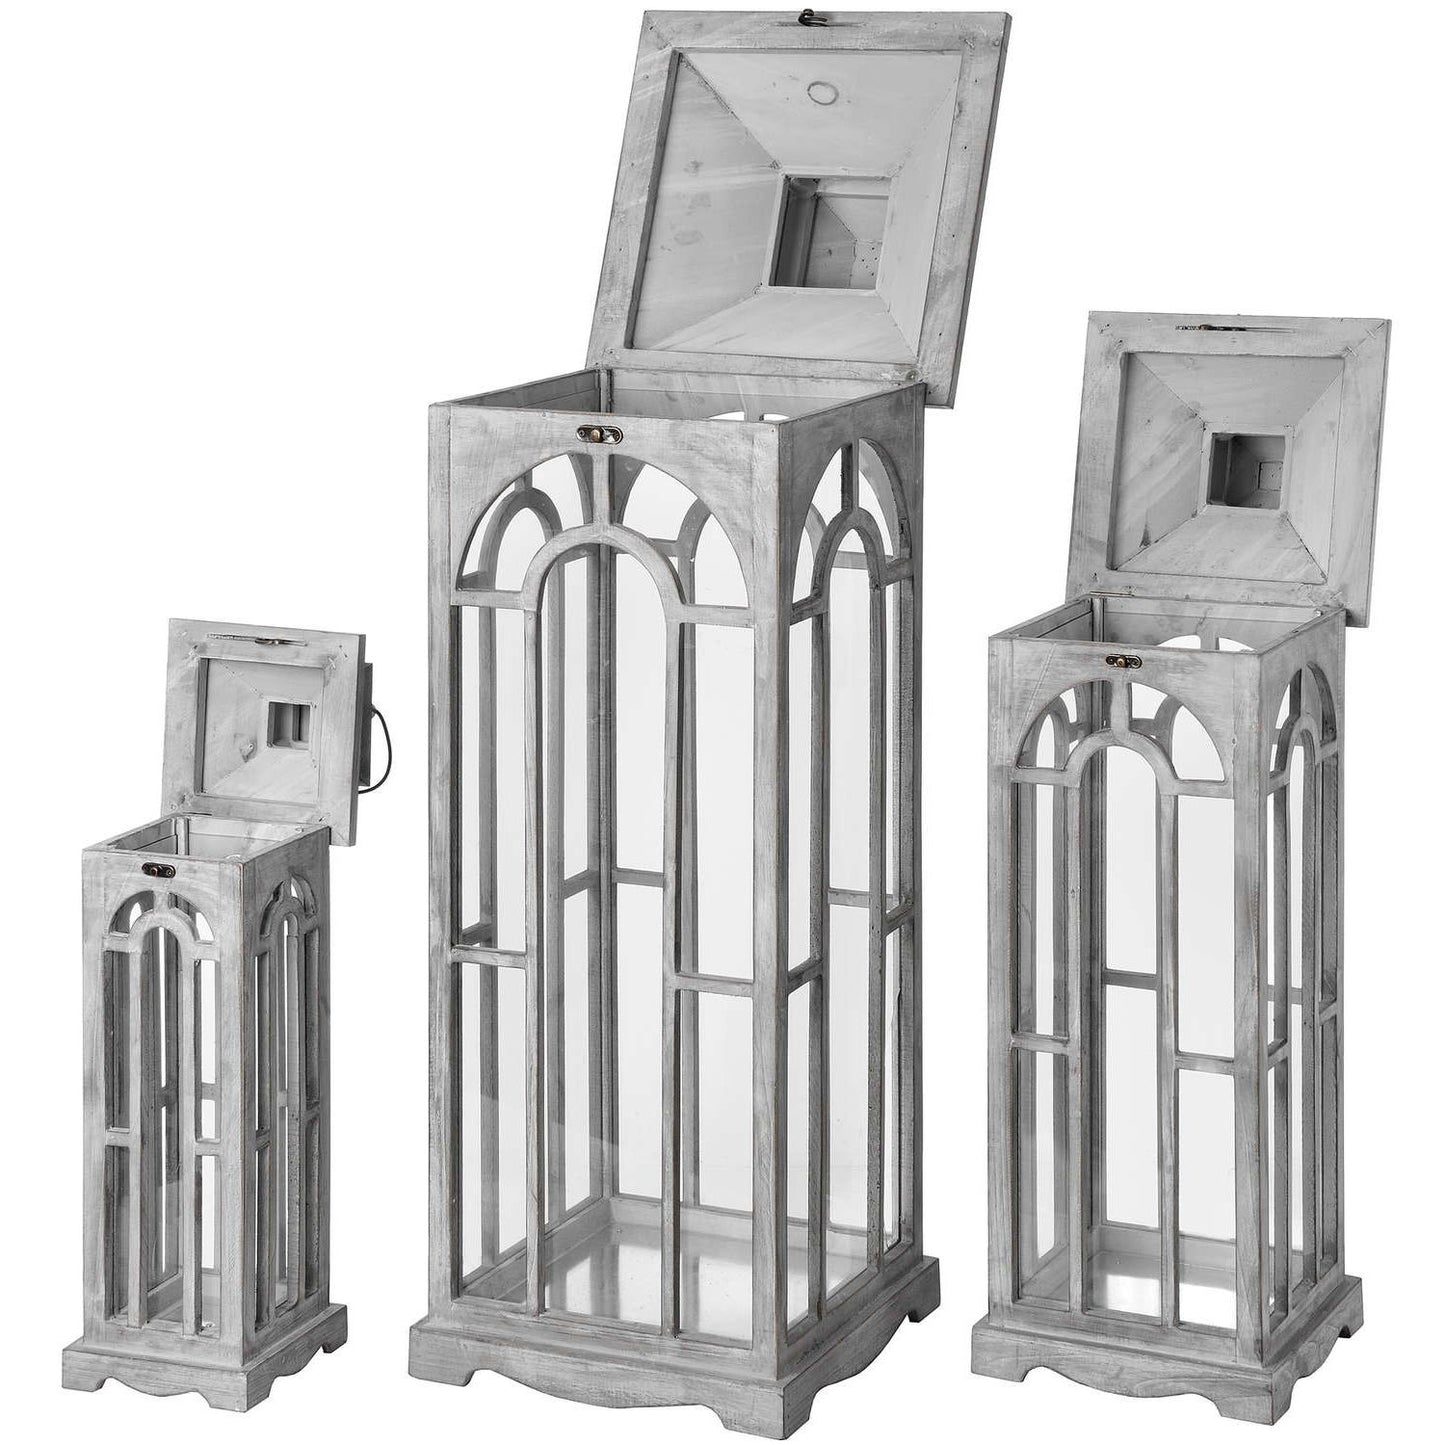 Three grey lanterns with archway design and white wash finish